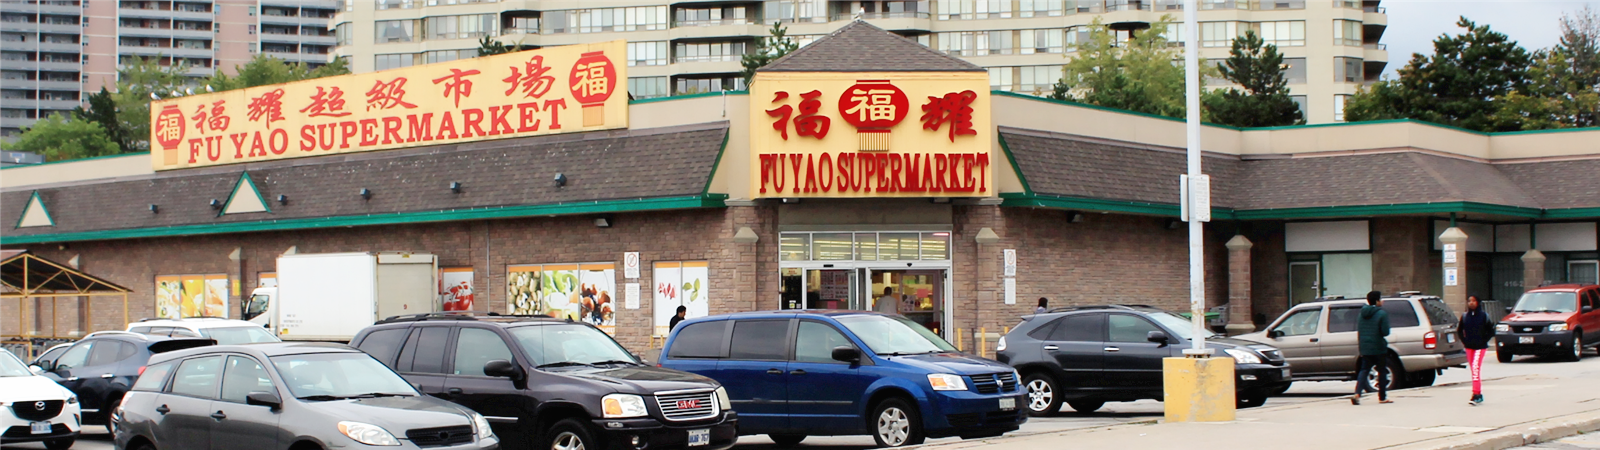 Fuyao Supermarket - Grocery Store